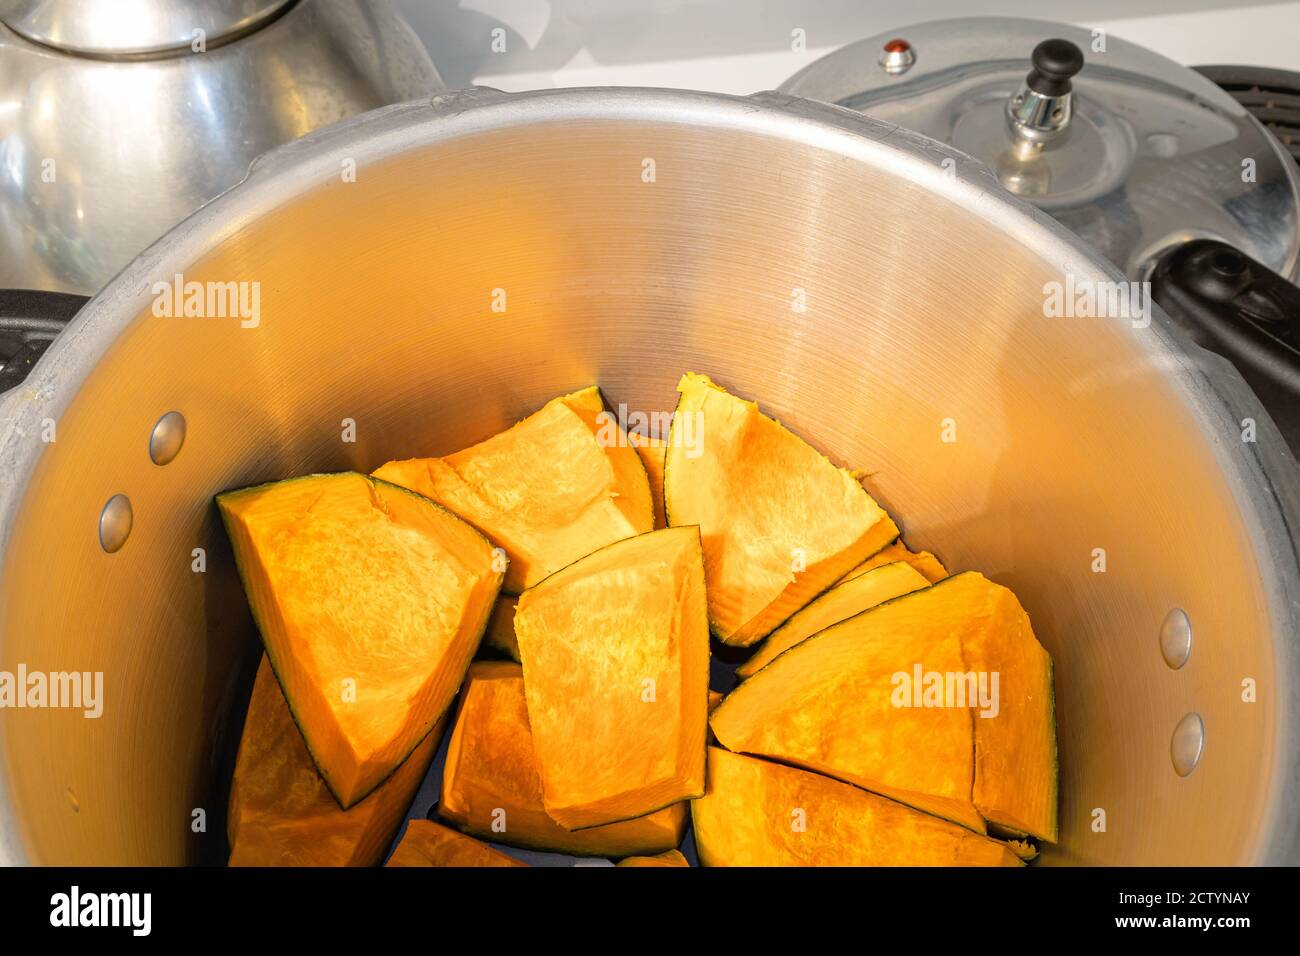 Buttercup squash pieces inside pressure cooker. Kabocha squash, turban squash or  Cucurbita maxima. Orange sweet flesh, high on vitamine a and fiber. Stock Photo